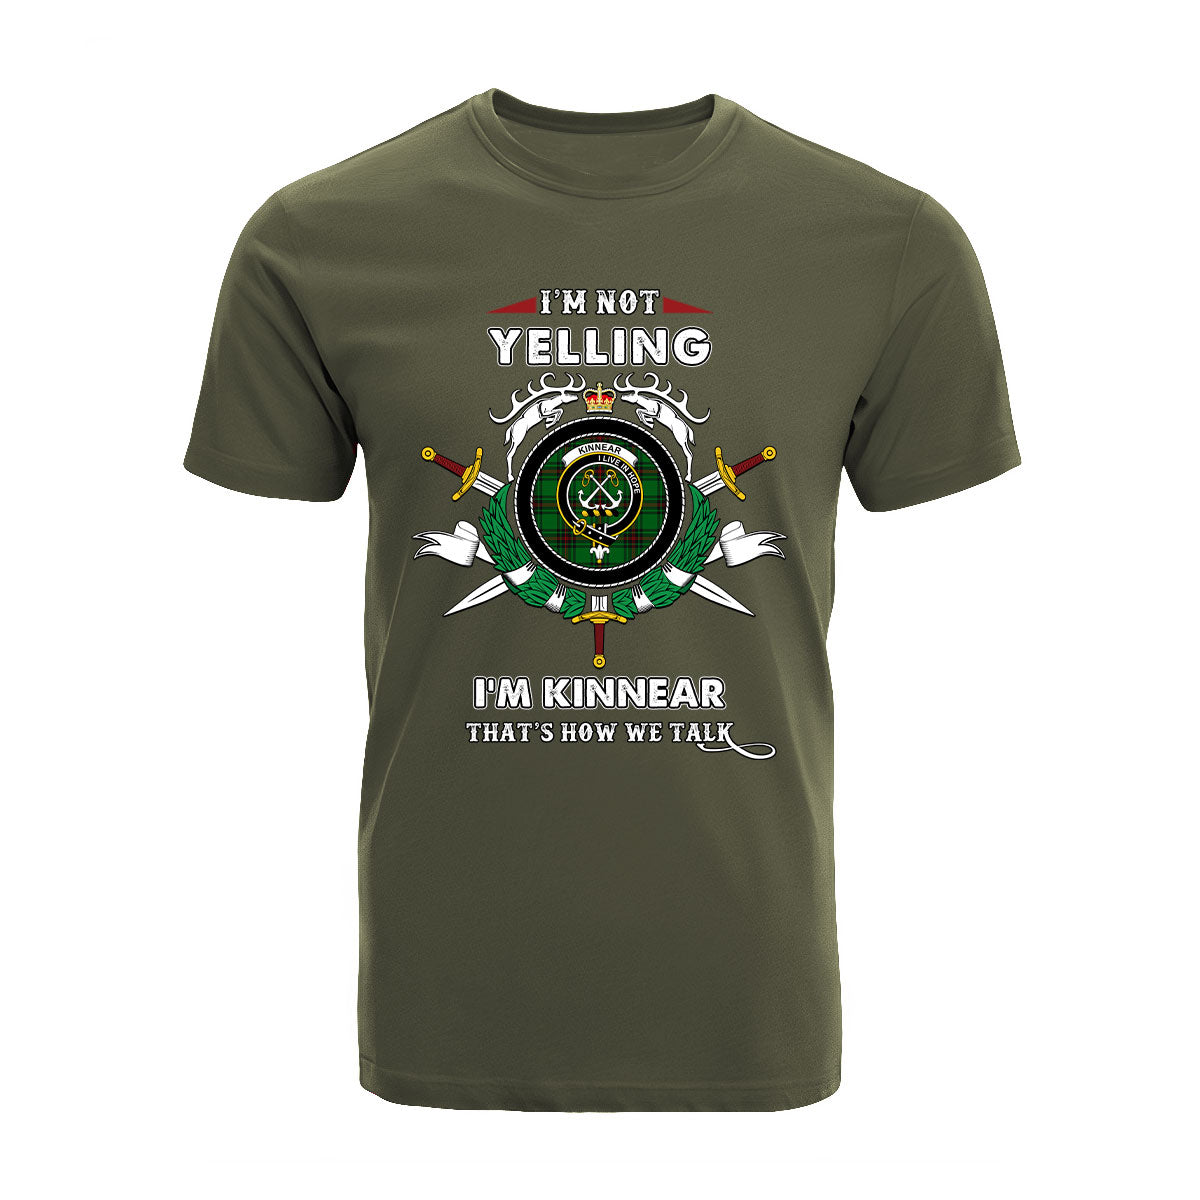 Kinnear Tartan Crest T-shirt - I'm not yelling style